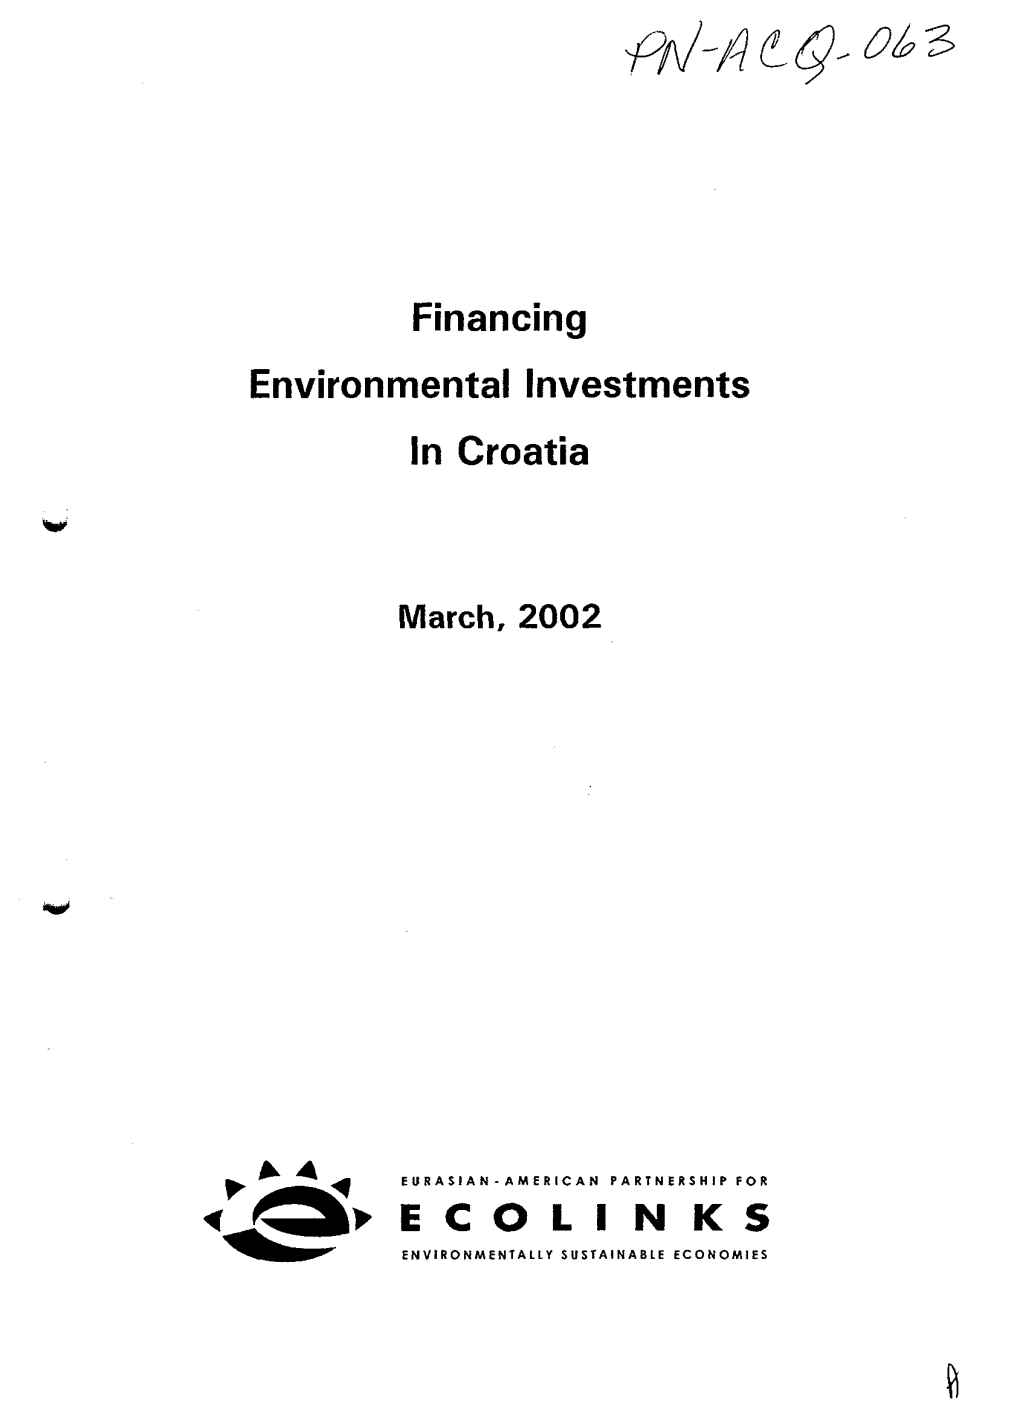 Financing Environmental Investments in Croatia